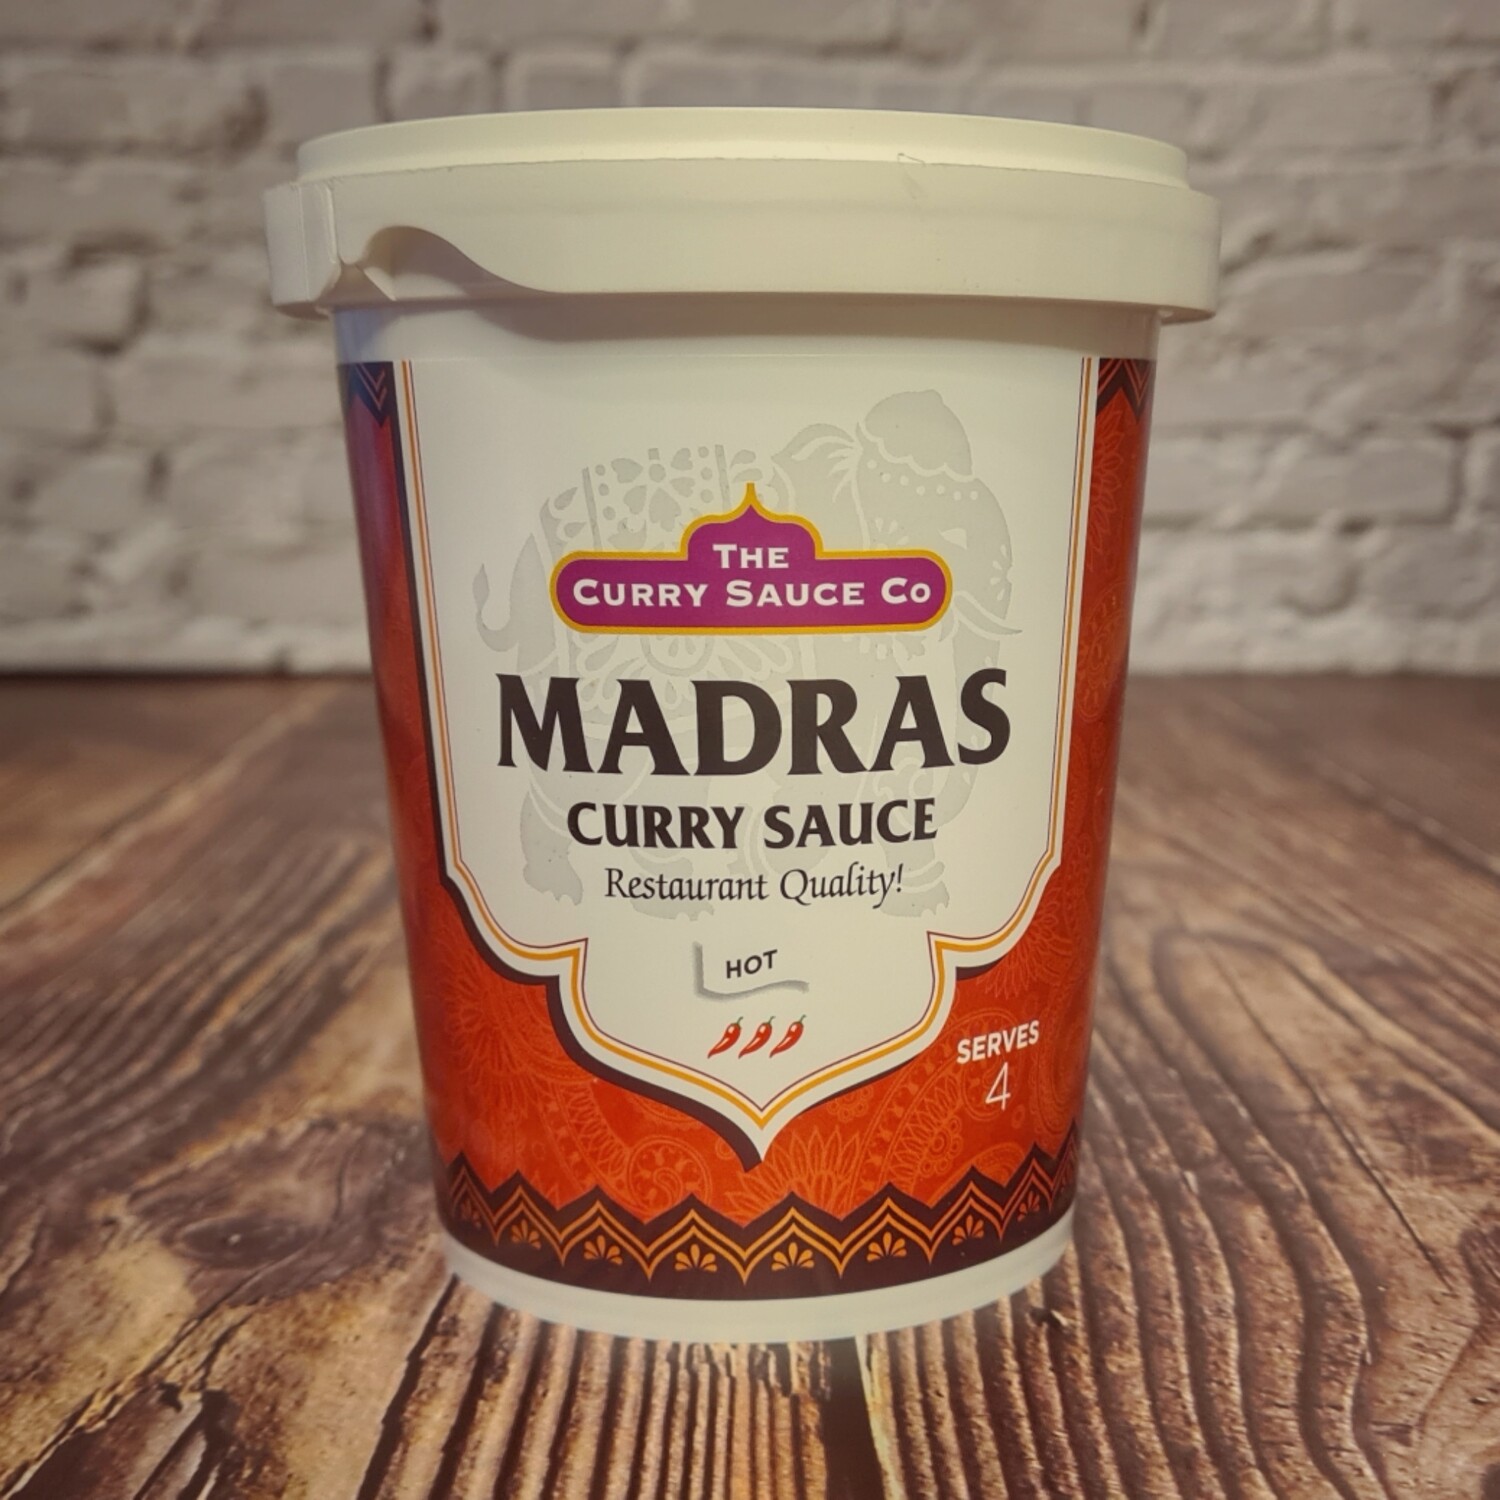 Madras Cooking Sauce